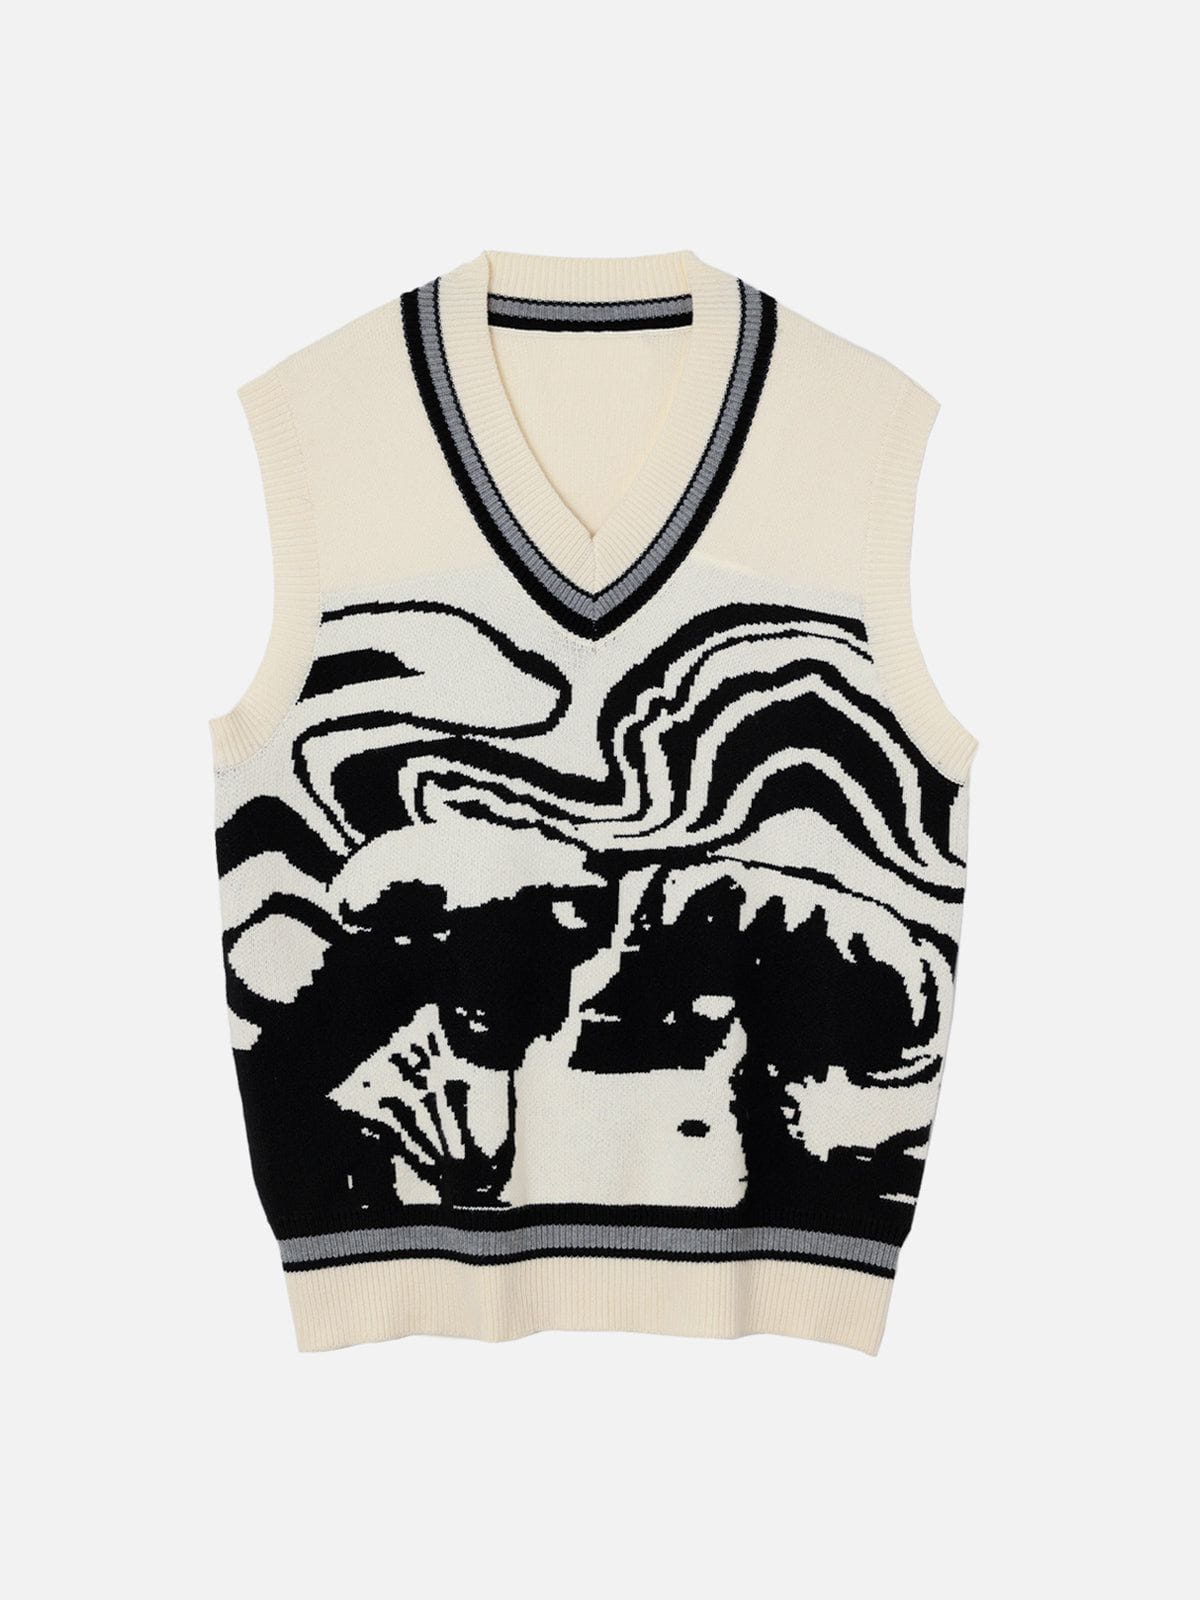 AlanBalen® - Skeleton Portrait Graphic Sweater Vest